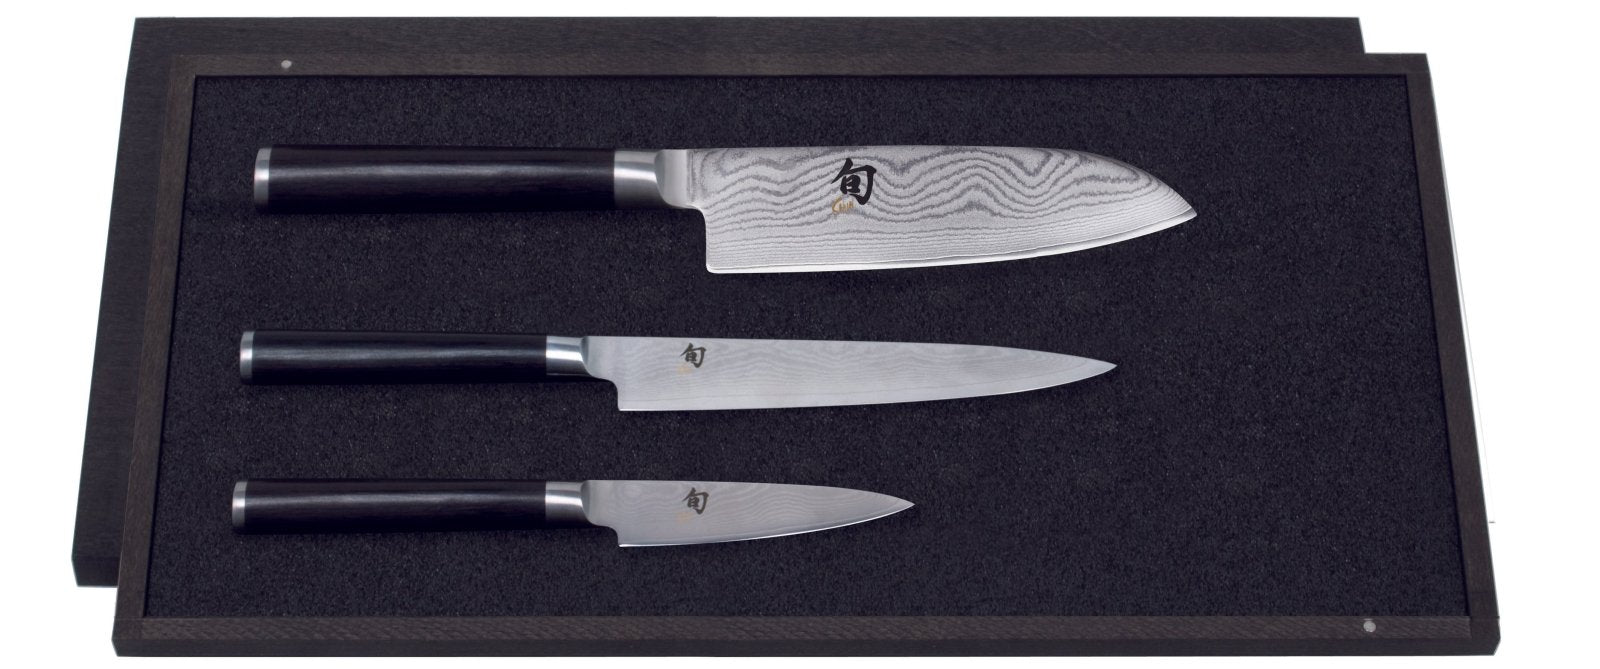 KAI Shun 3 Piece Knife Set - Santoku Knife & Utility Knife & Paring Knife - KAI-DMS-310 - The Cotswold Knife Company